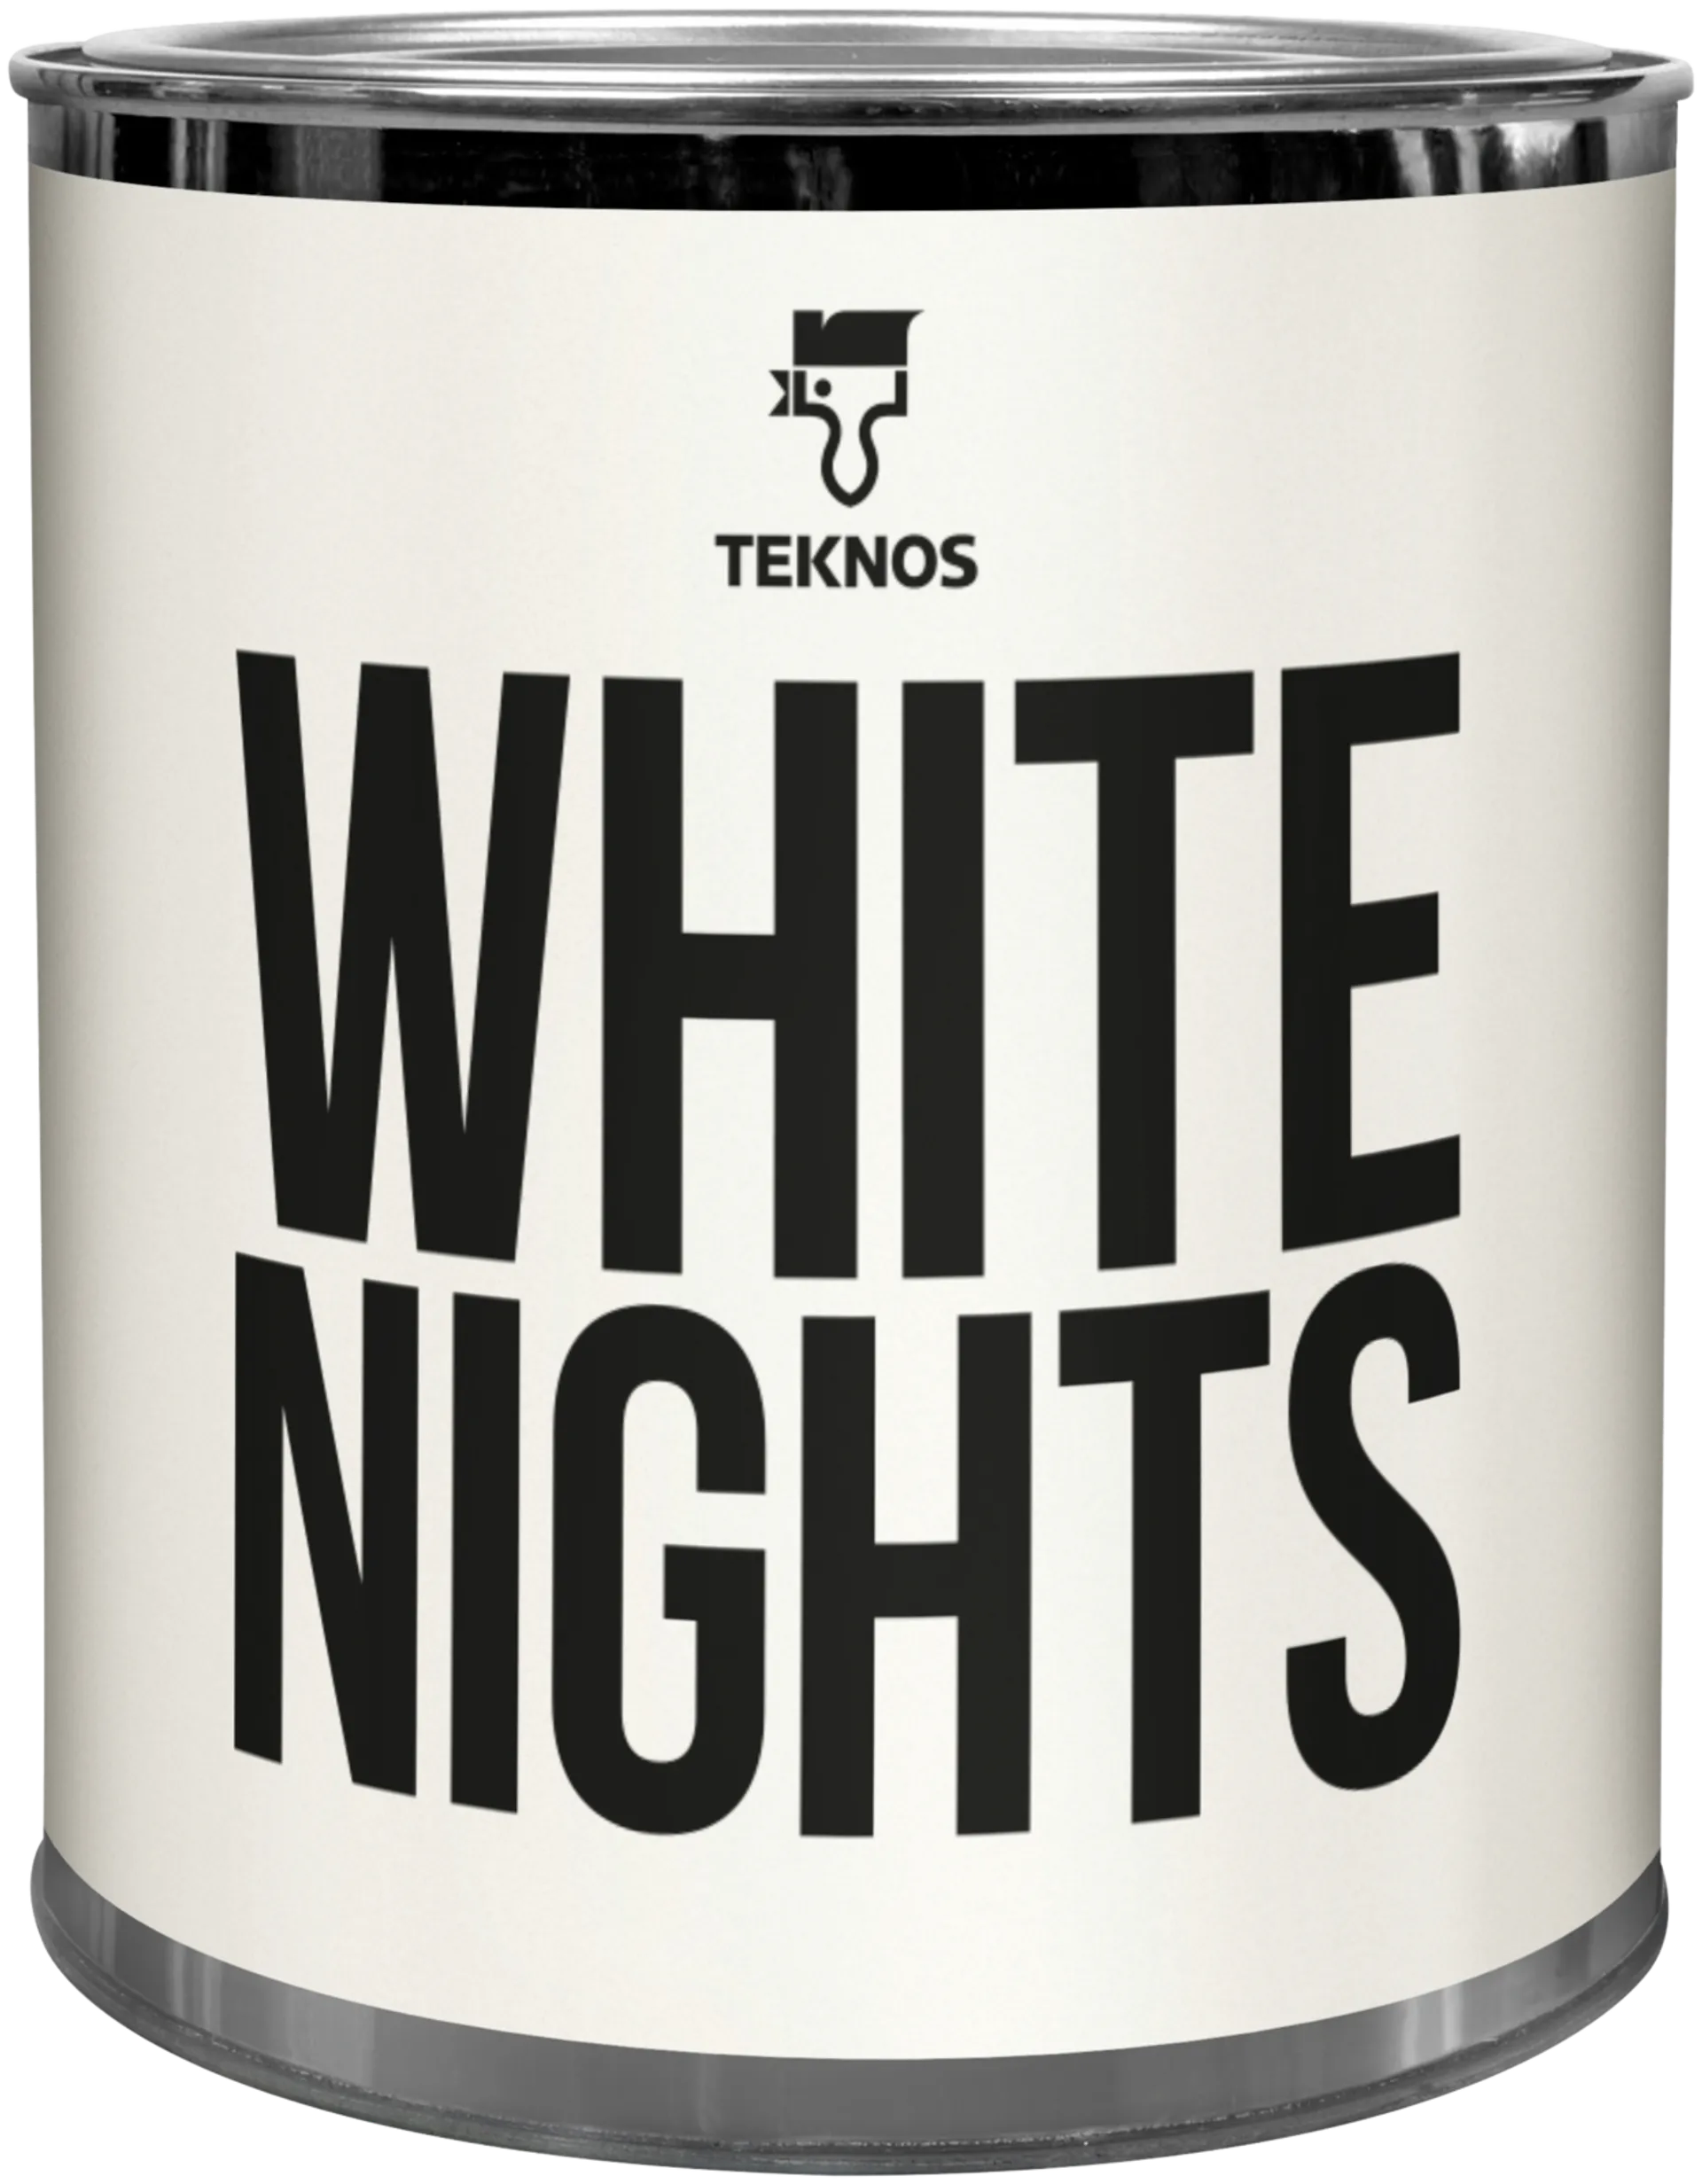 Teknos Colour sample White nights T1744